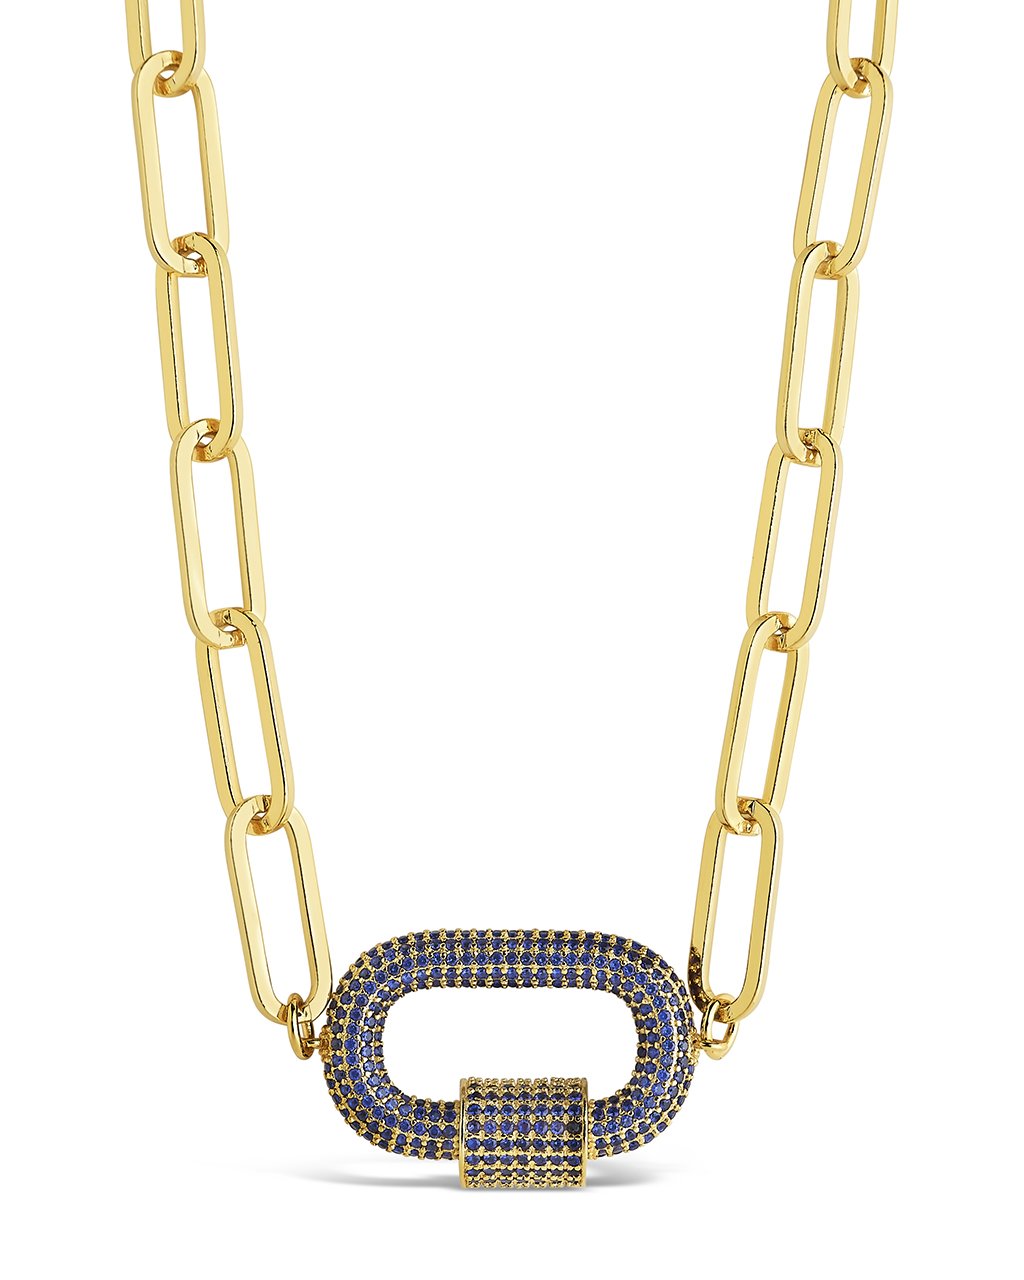 Pave CZ Carabiner Linked Lock Necklace Necklace Sterling Forever Gold Blue 